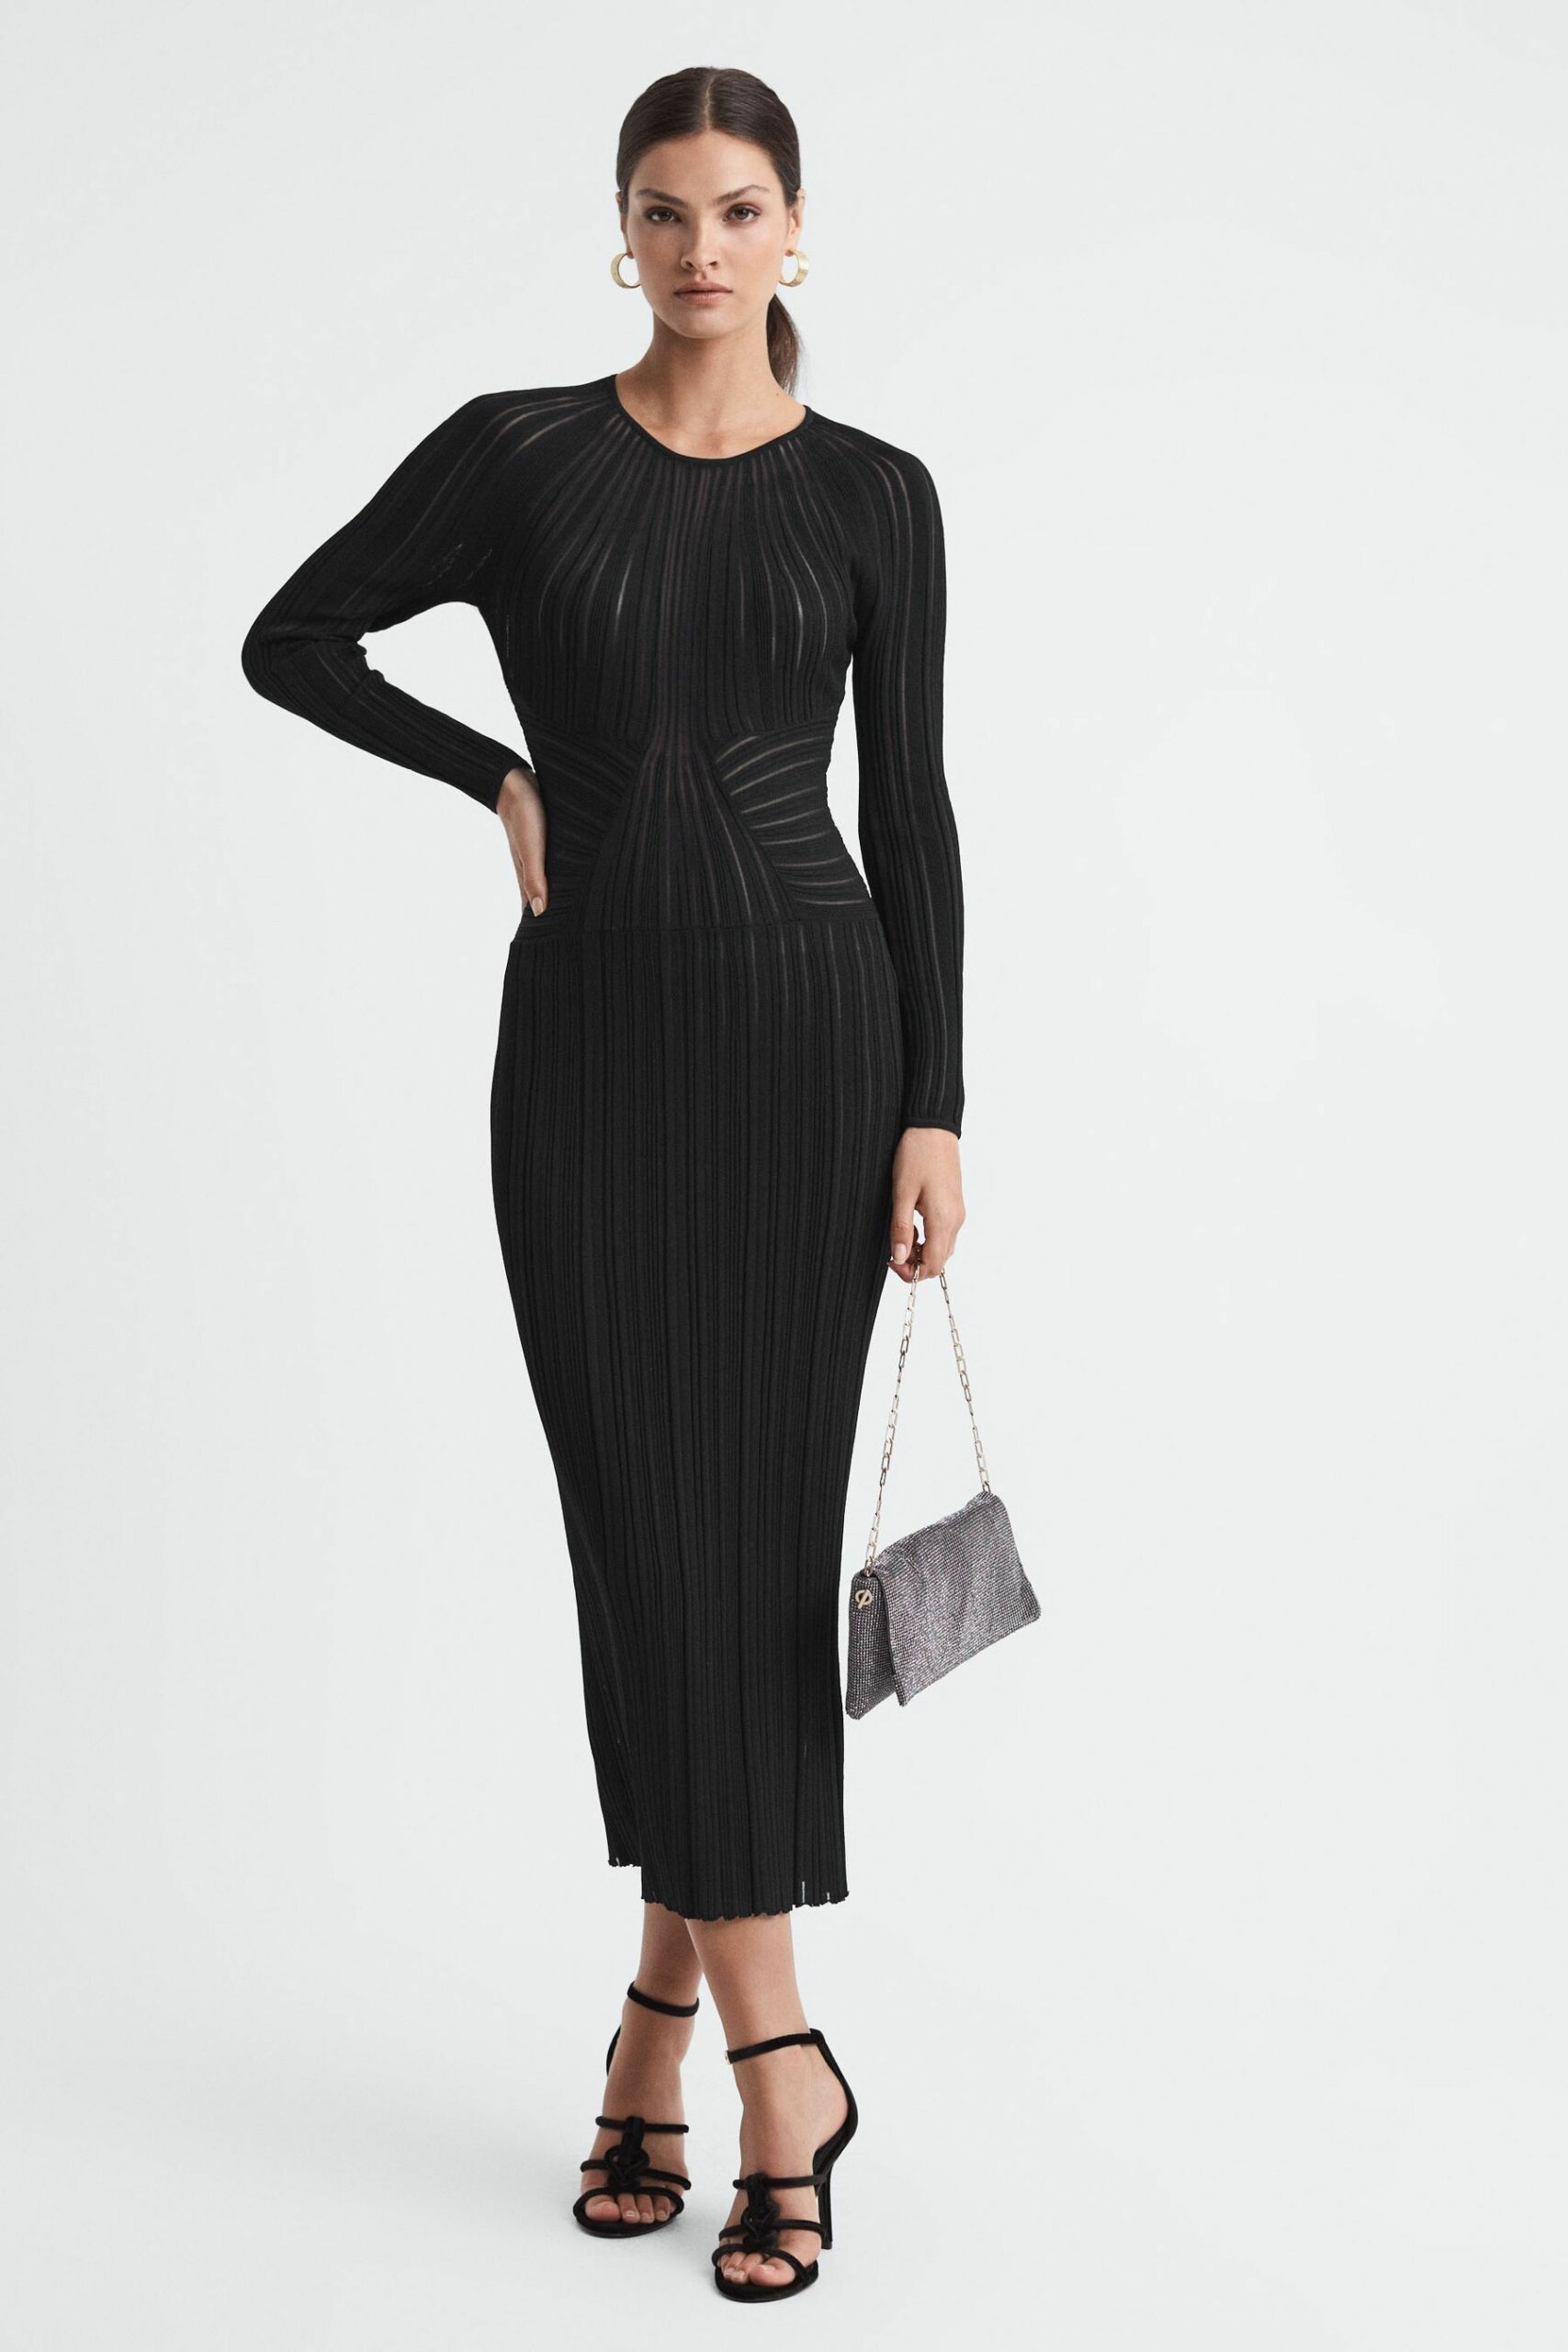 Ida - Black Sheer Striped Bodycon Midi Dress